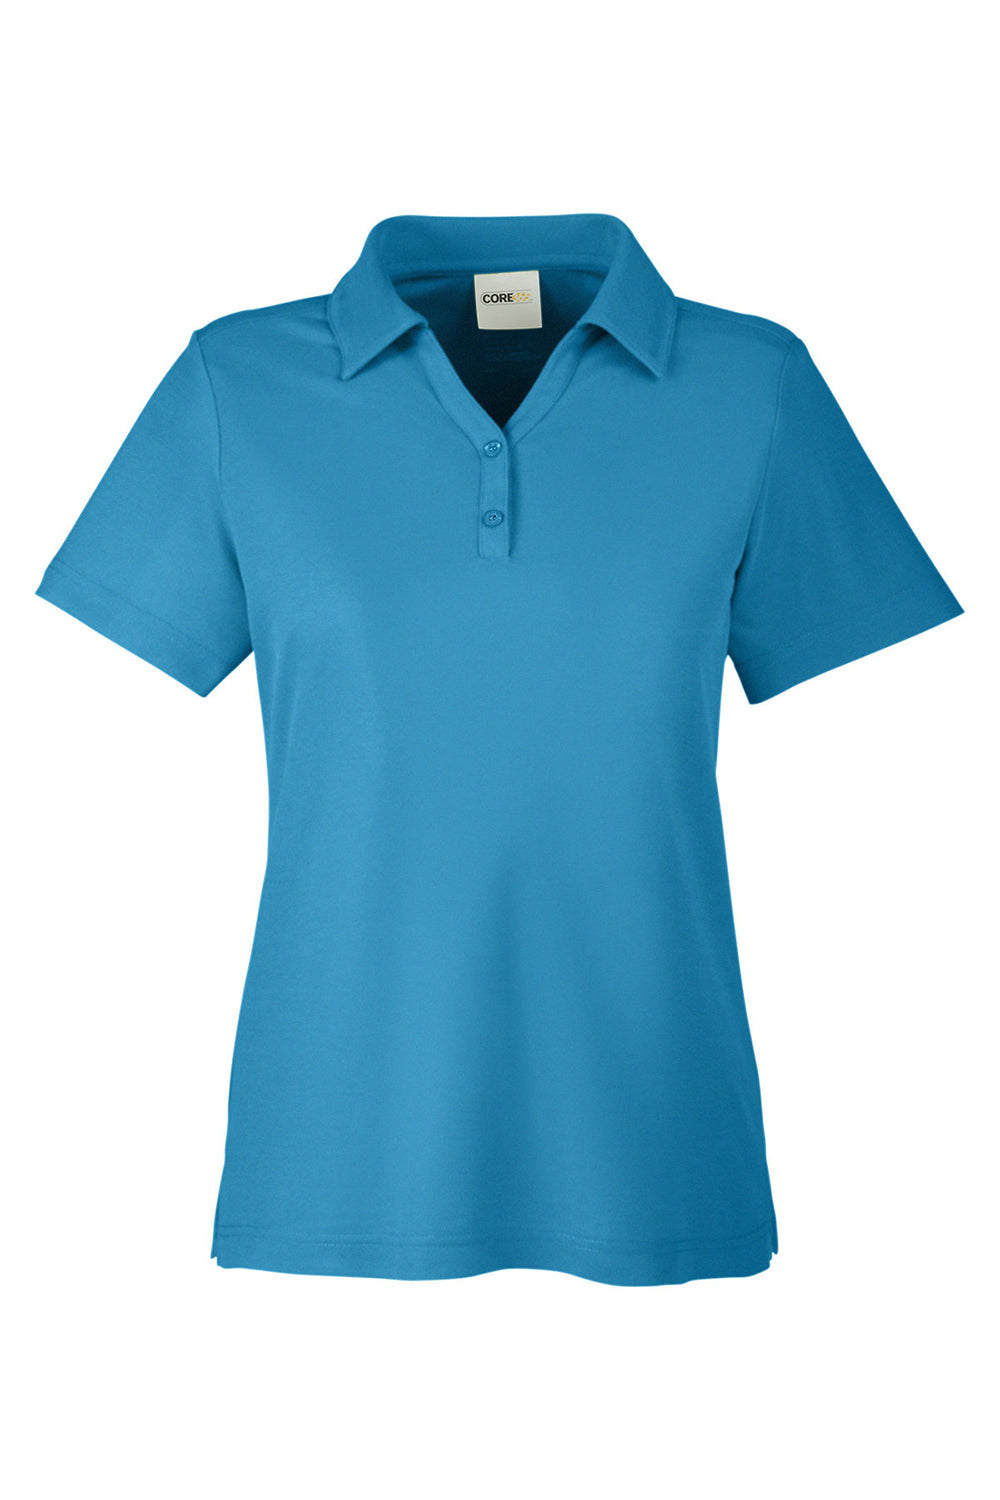 Core 365 CE112W Womens Fusion ChromaSoft Performance Moisture Wicking Pique Short Sleeve Polo Shirt Electric Blue Flat Front